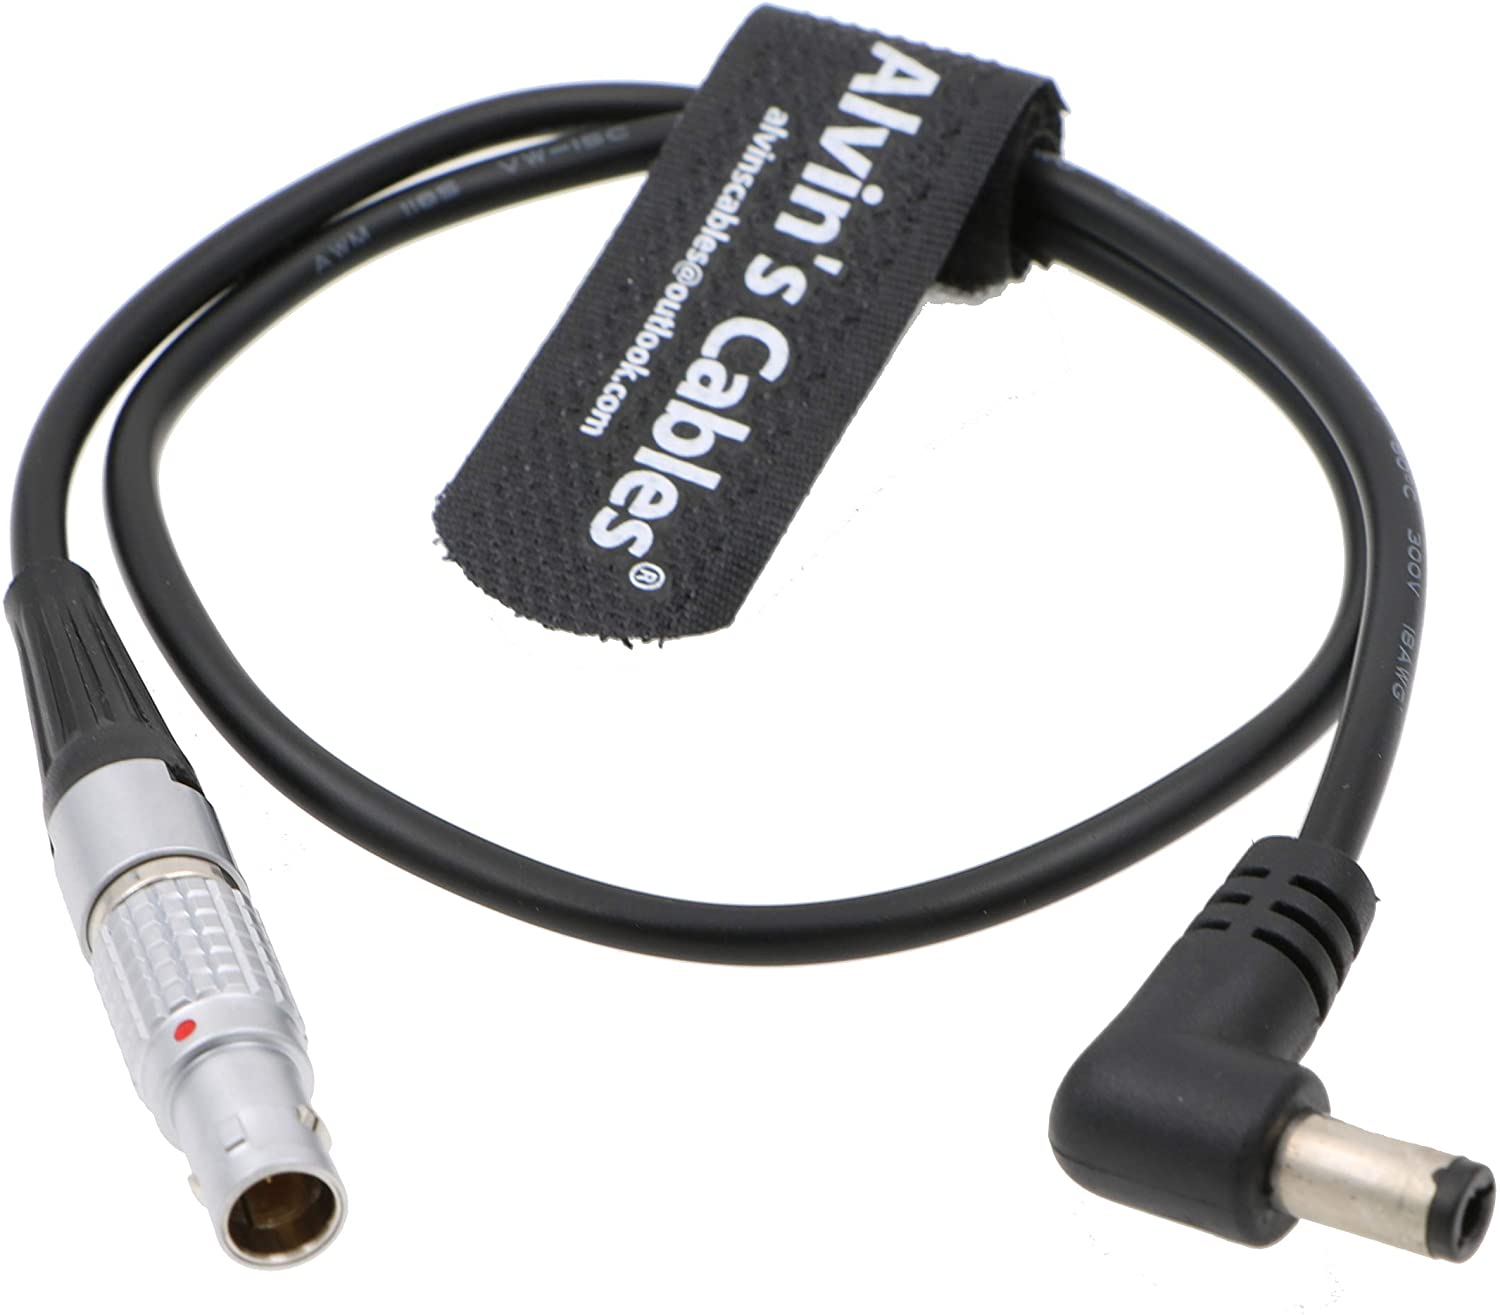 Alvin's Cables 2 Pin auf rechtwinkliges DC-Kabel für Teradek Bolt Transmitter Tilta Batterieplatte